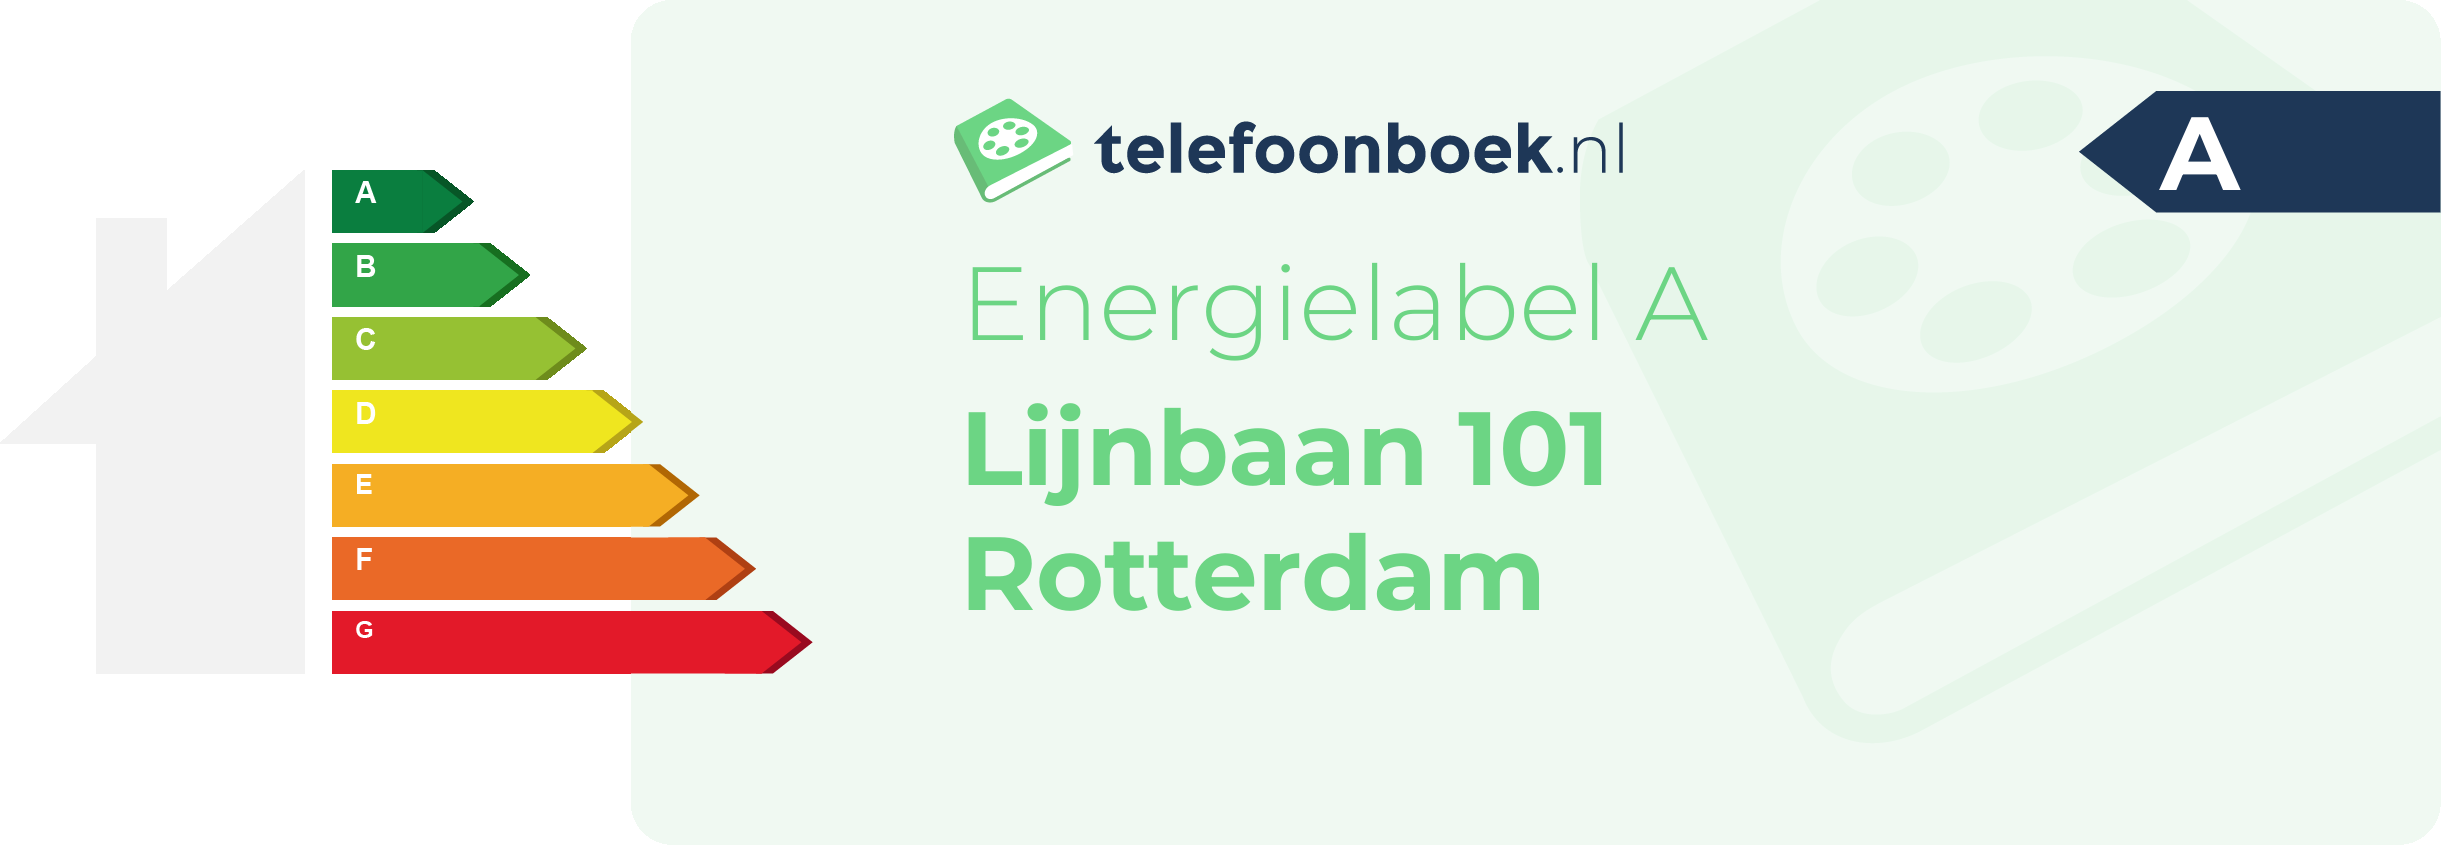 Energielabel Lijnbaan 101 Rotterdam